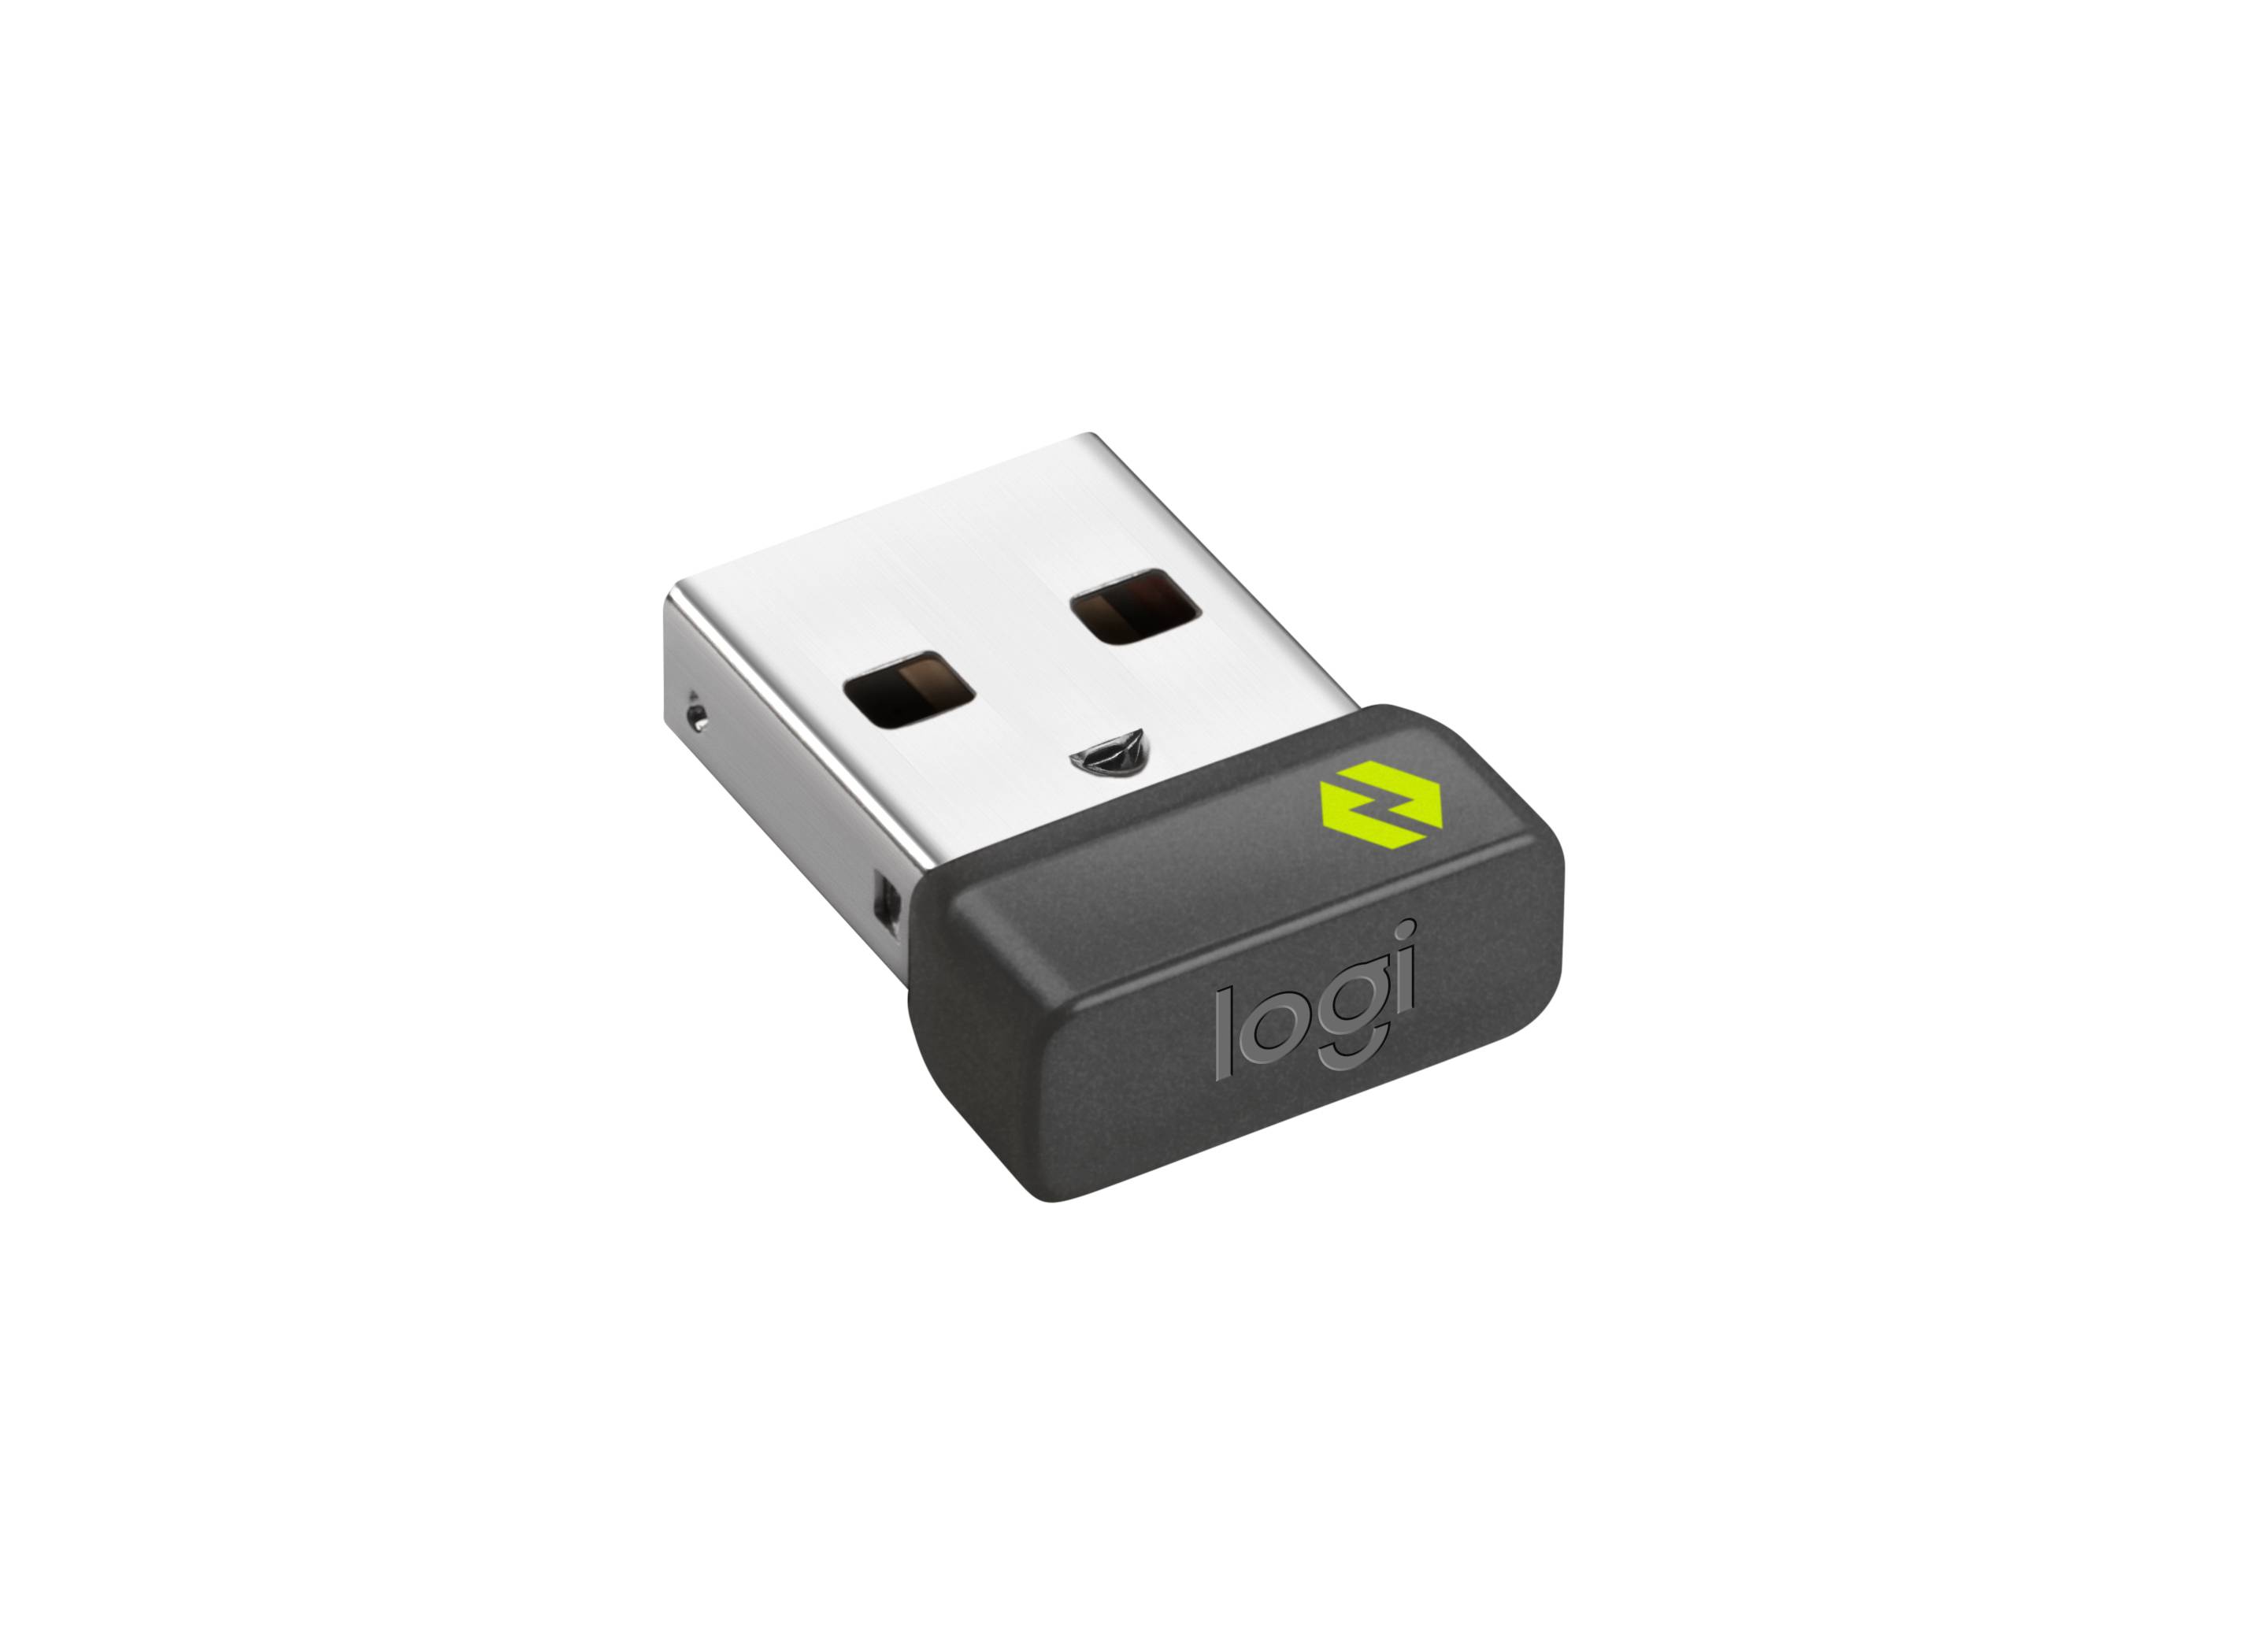 Rca Informatique - Image du produit : LOGI BOLT USB RECEIVER N/AEMEA